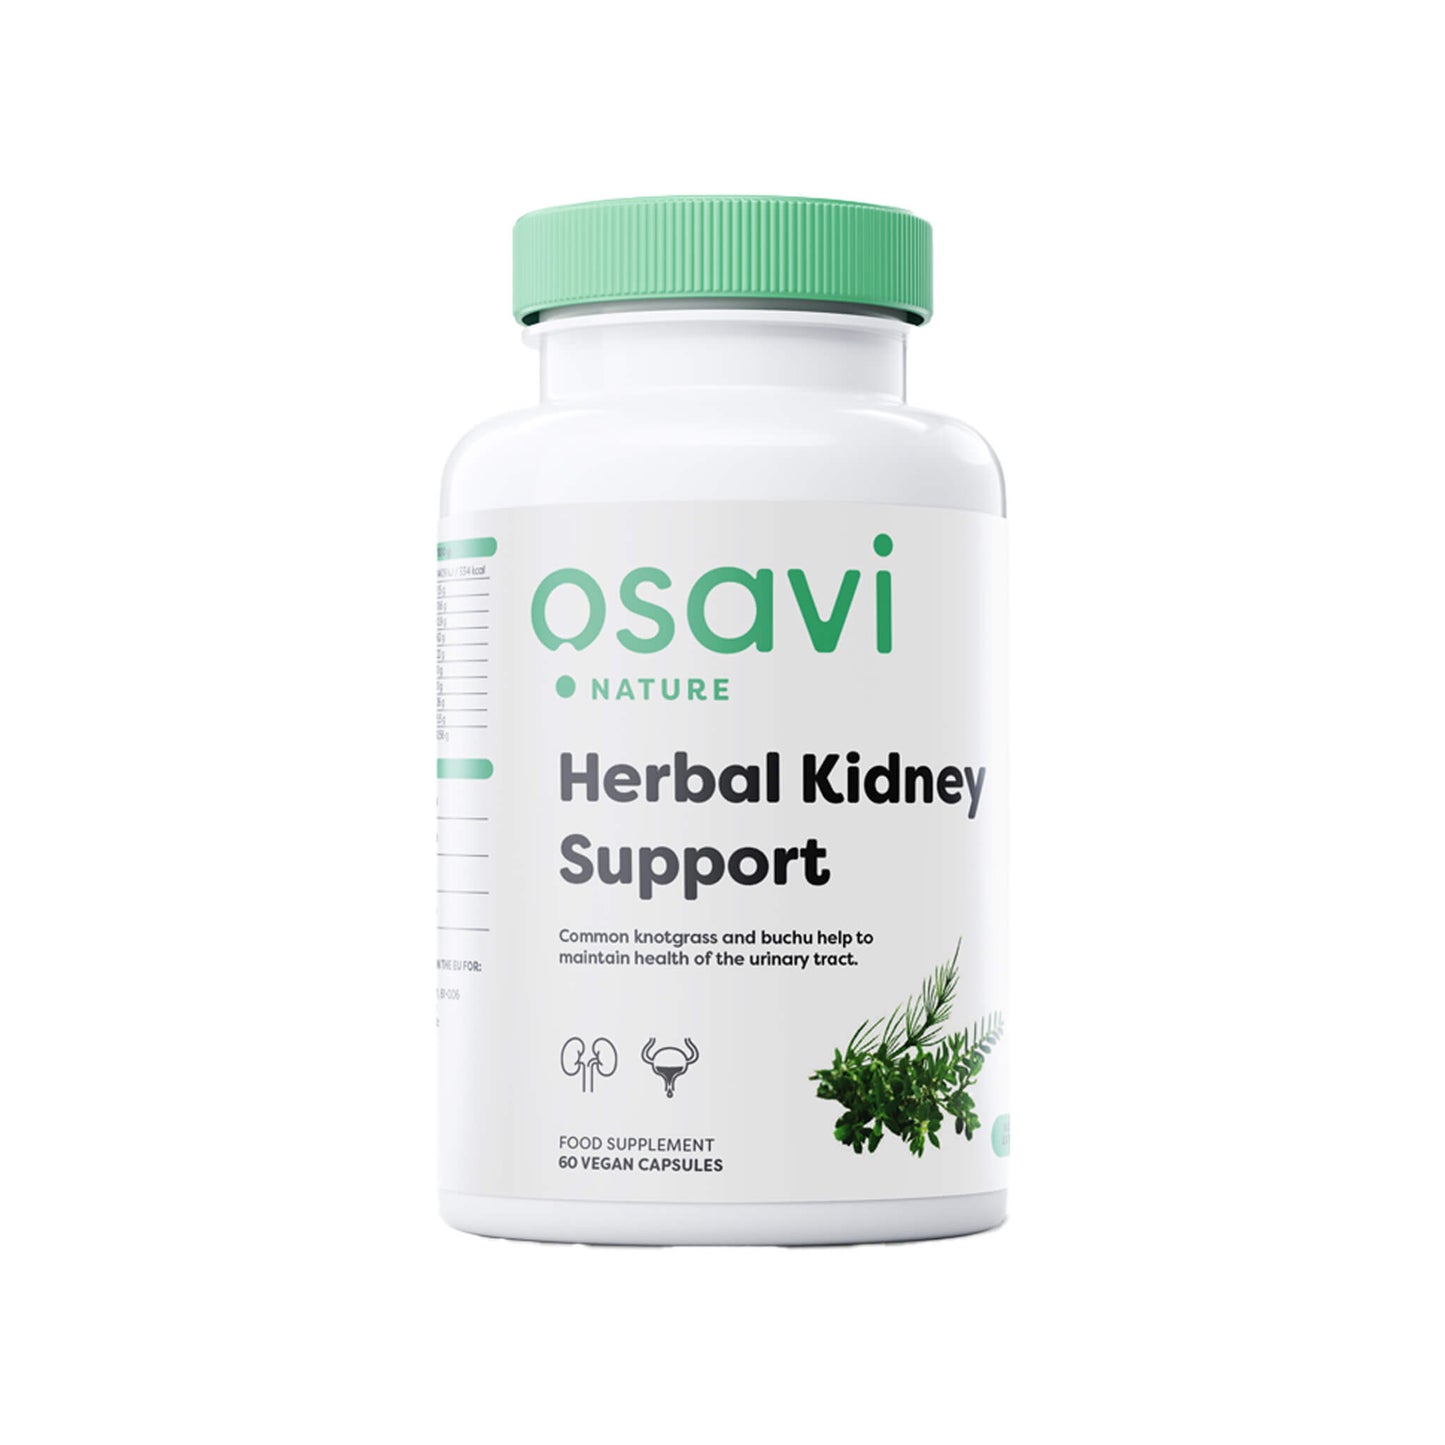 Osavi Herbal Kidney Support